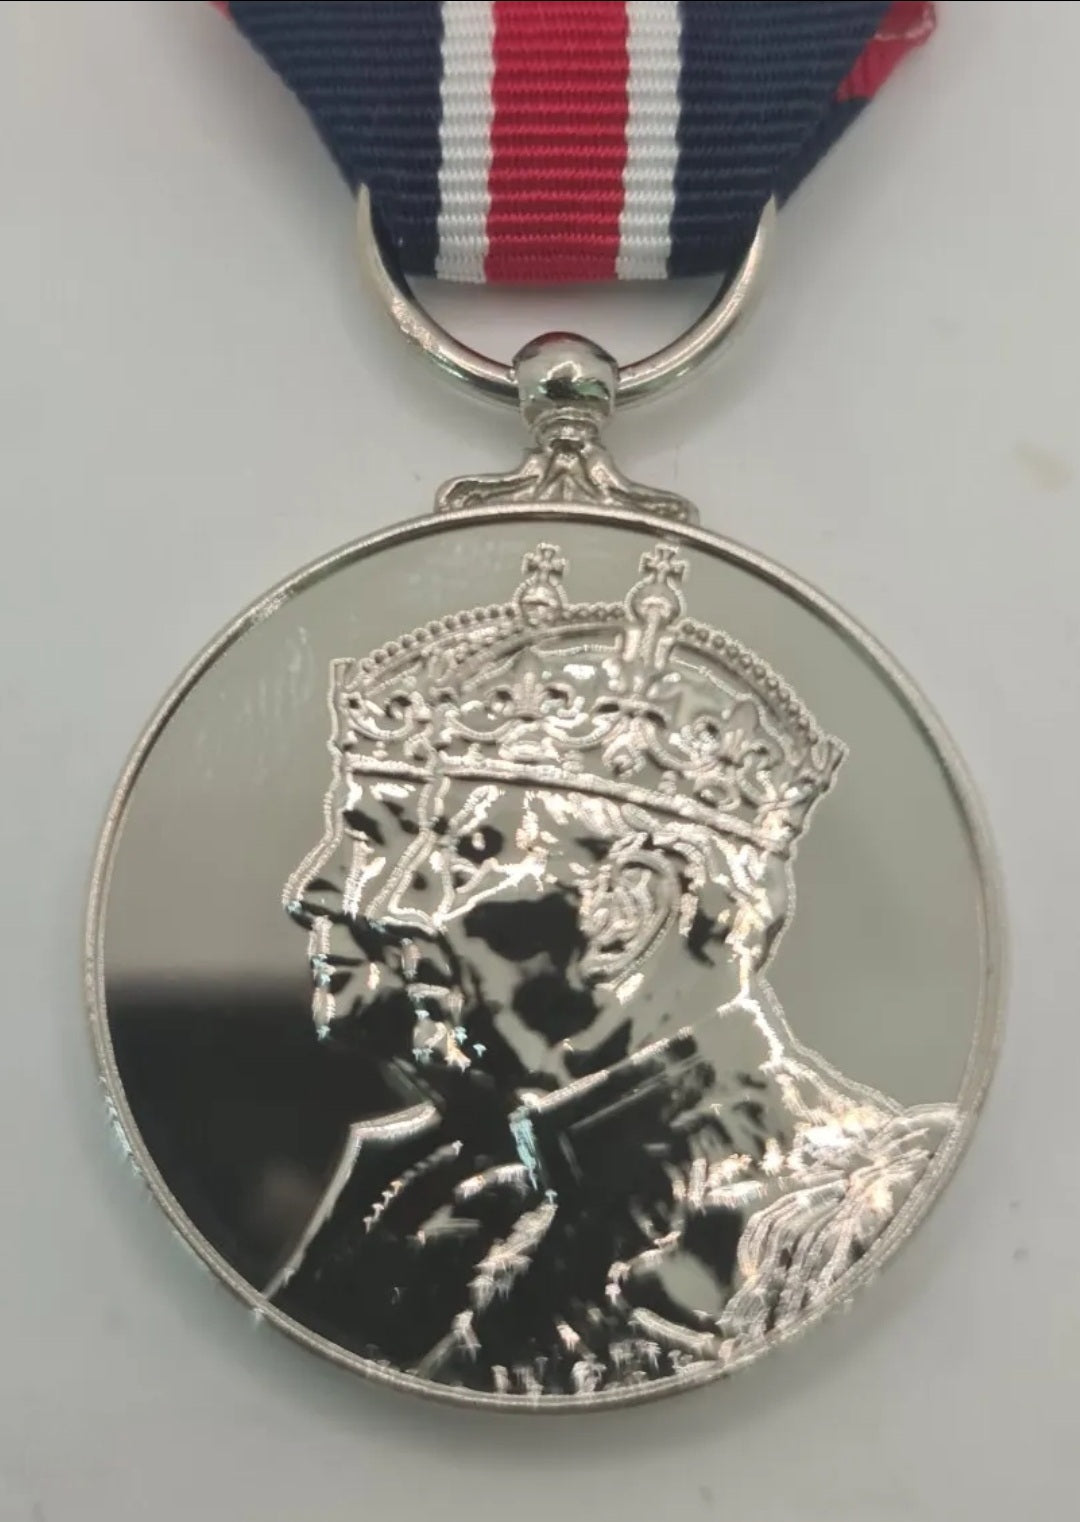 King Charles III Coronation Medal replica.